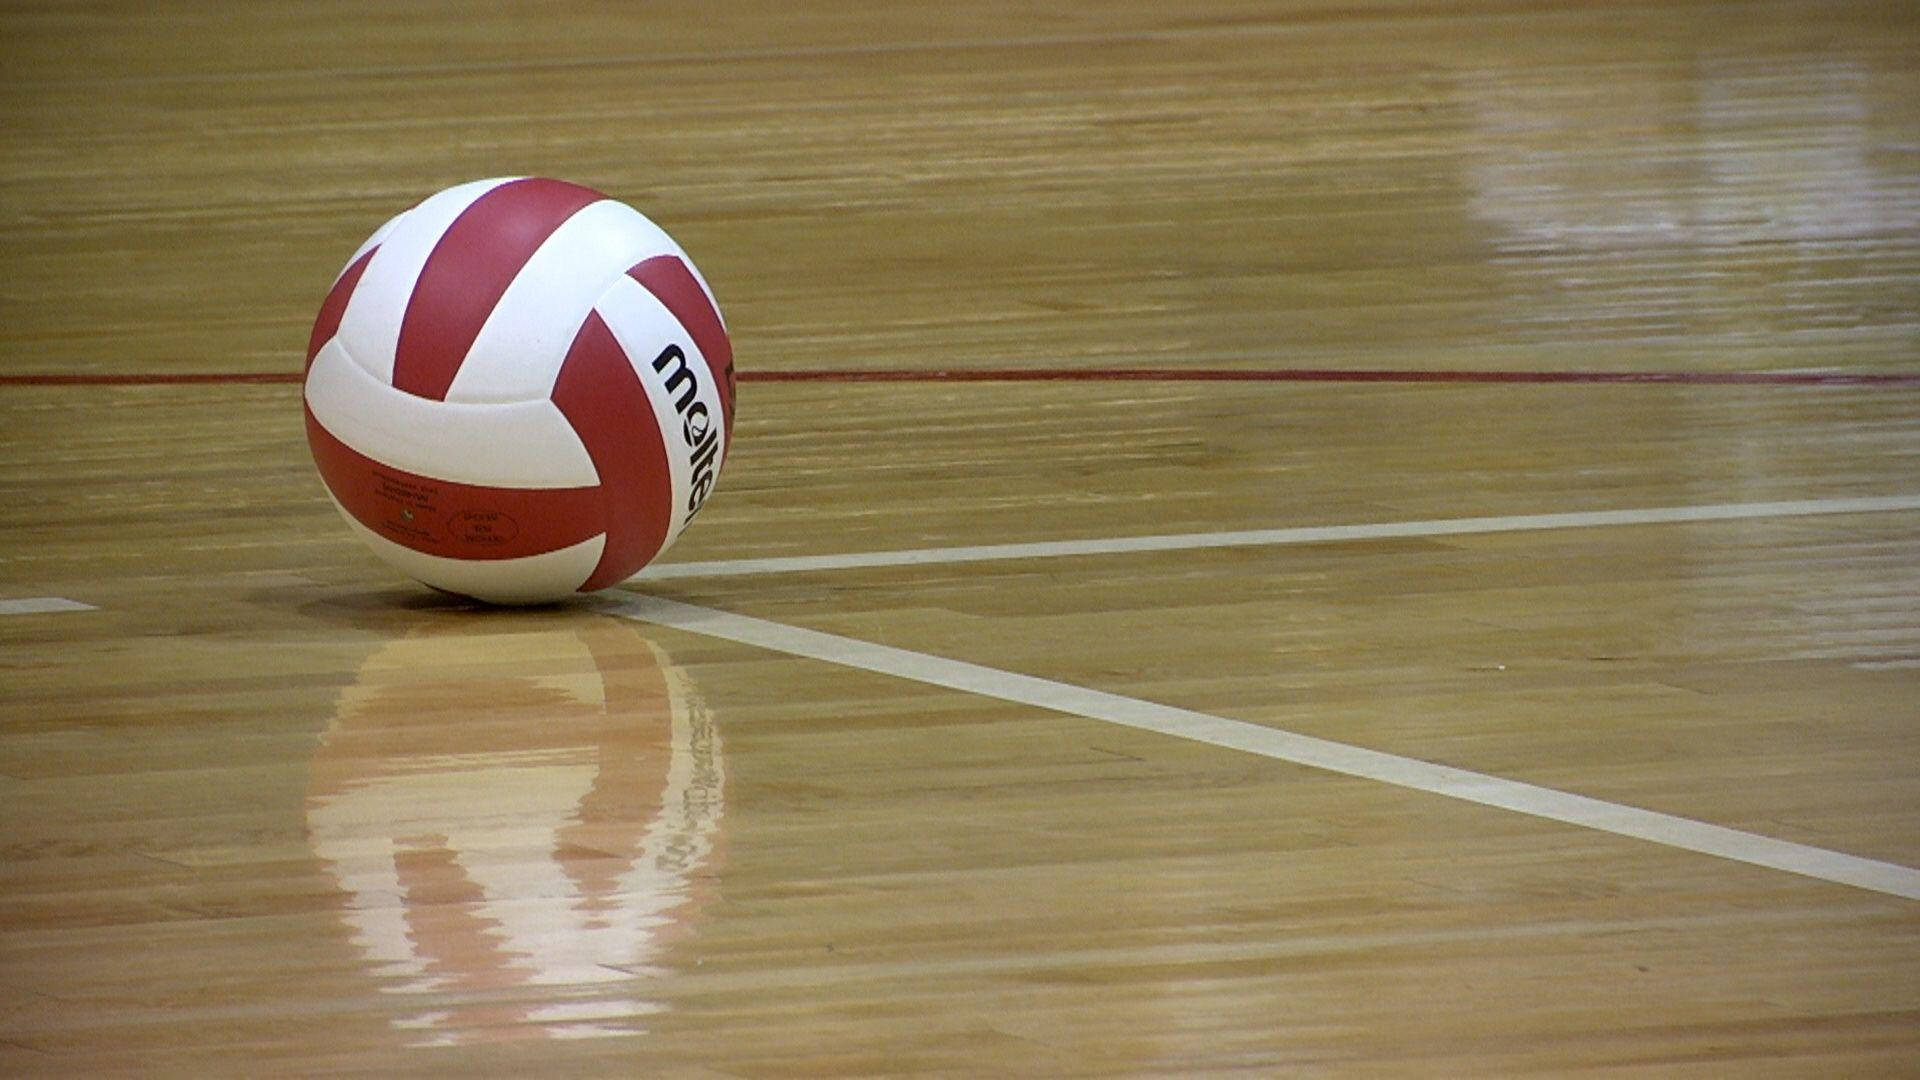 gym volleyball net background